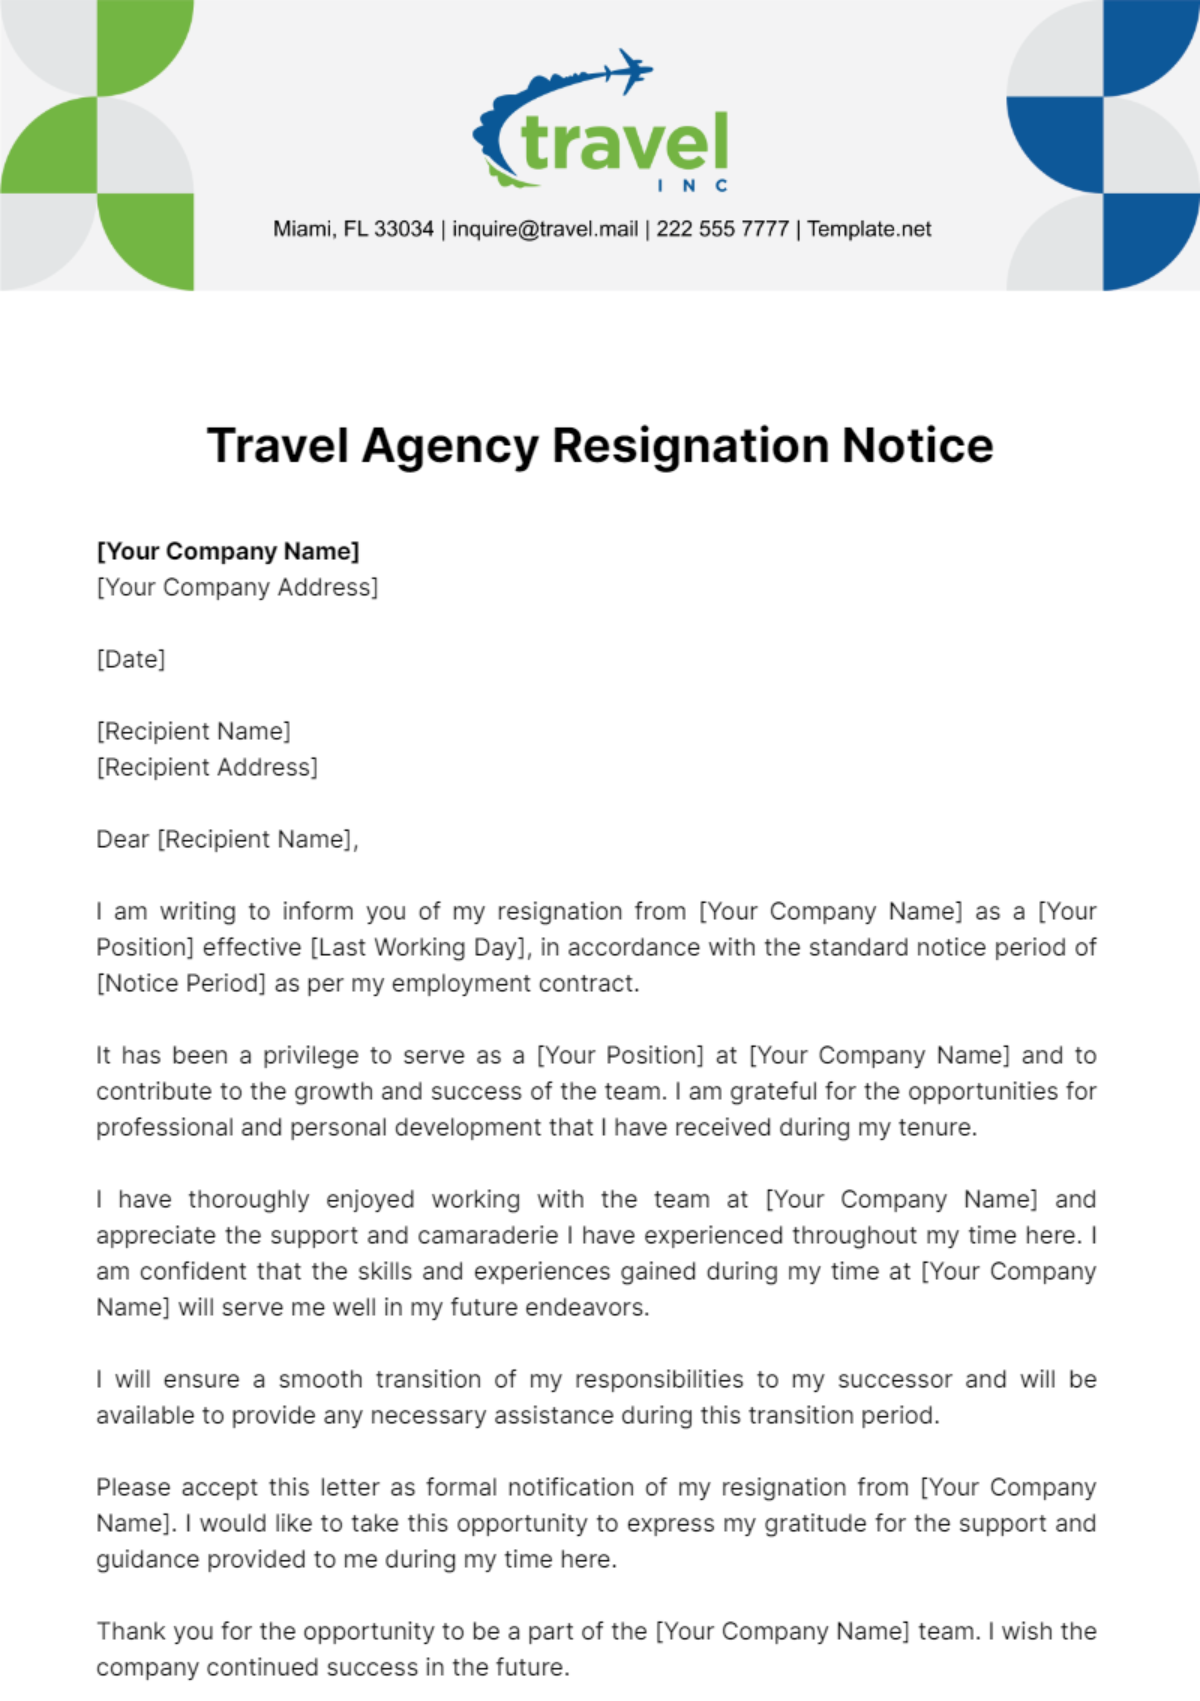 Travel Agency Resignation Notice Template